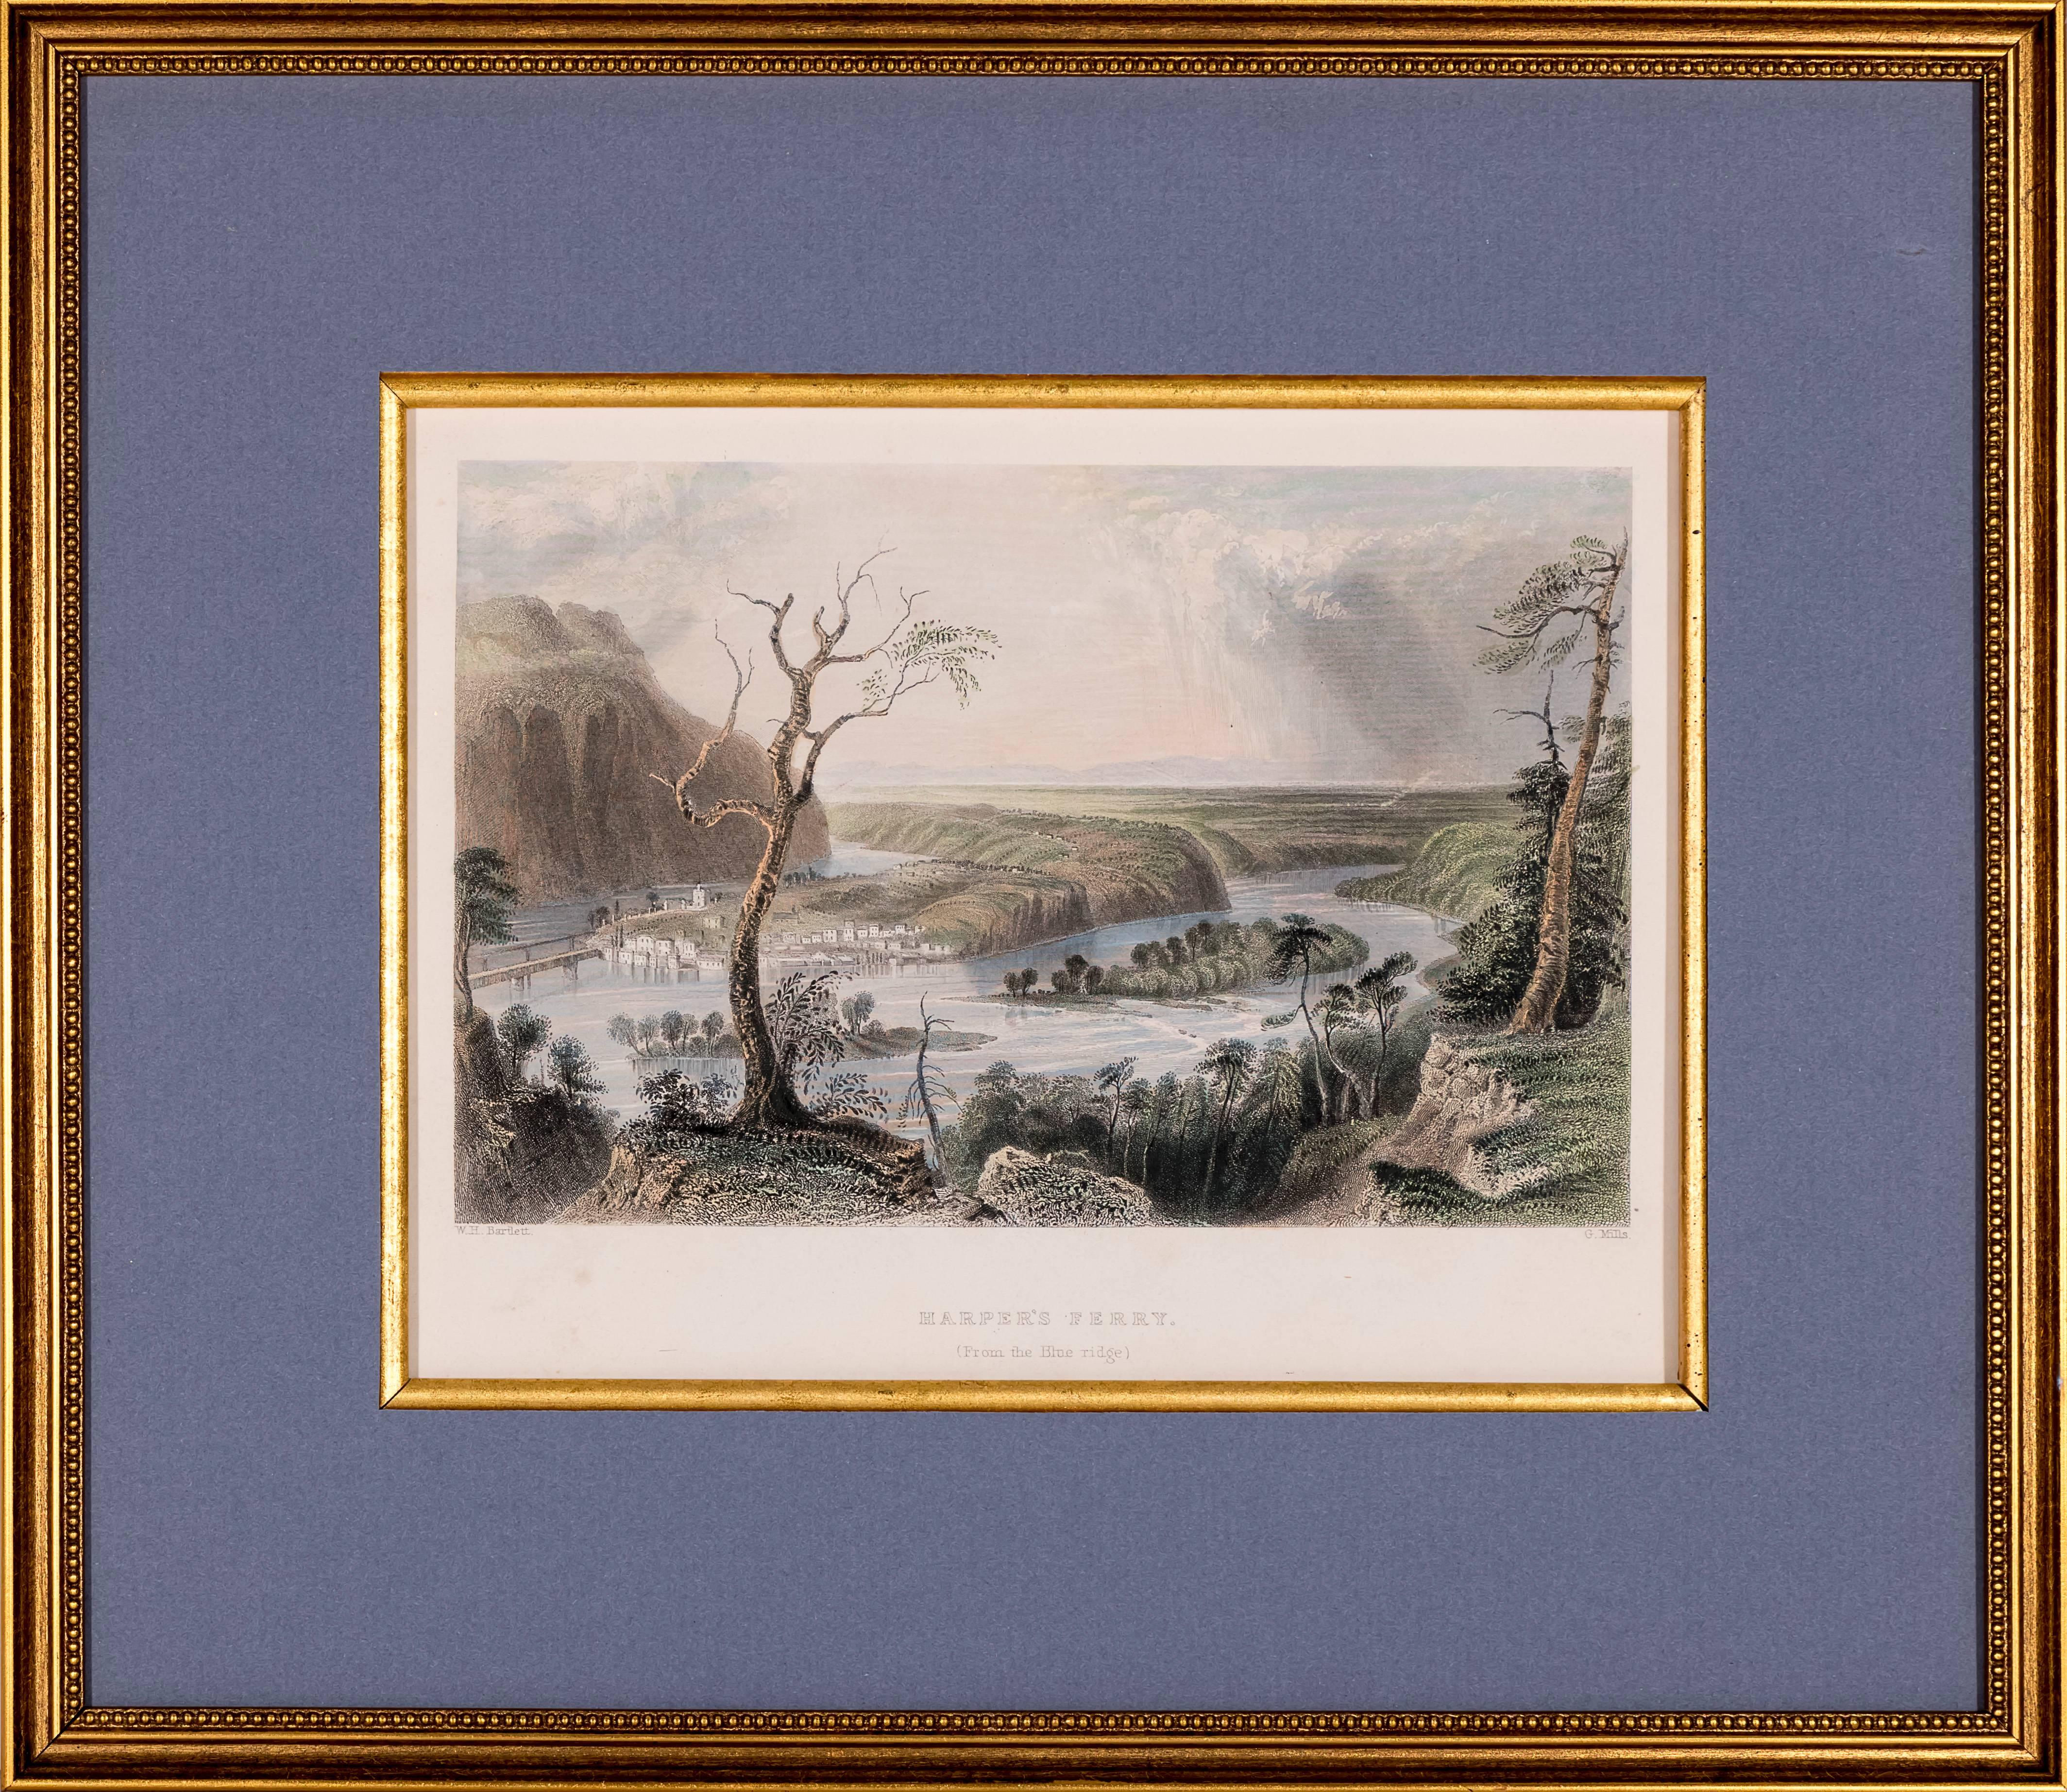 W. H. Bartlett Landscape Print - Harper's Ferry from the Blue Ridge